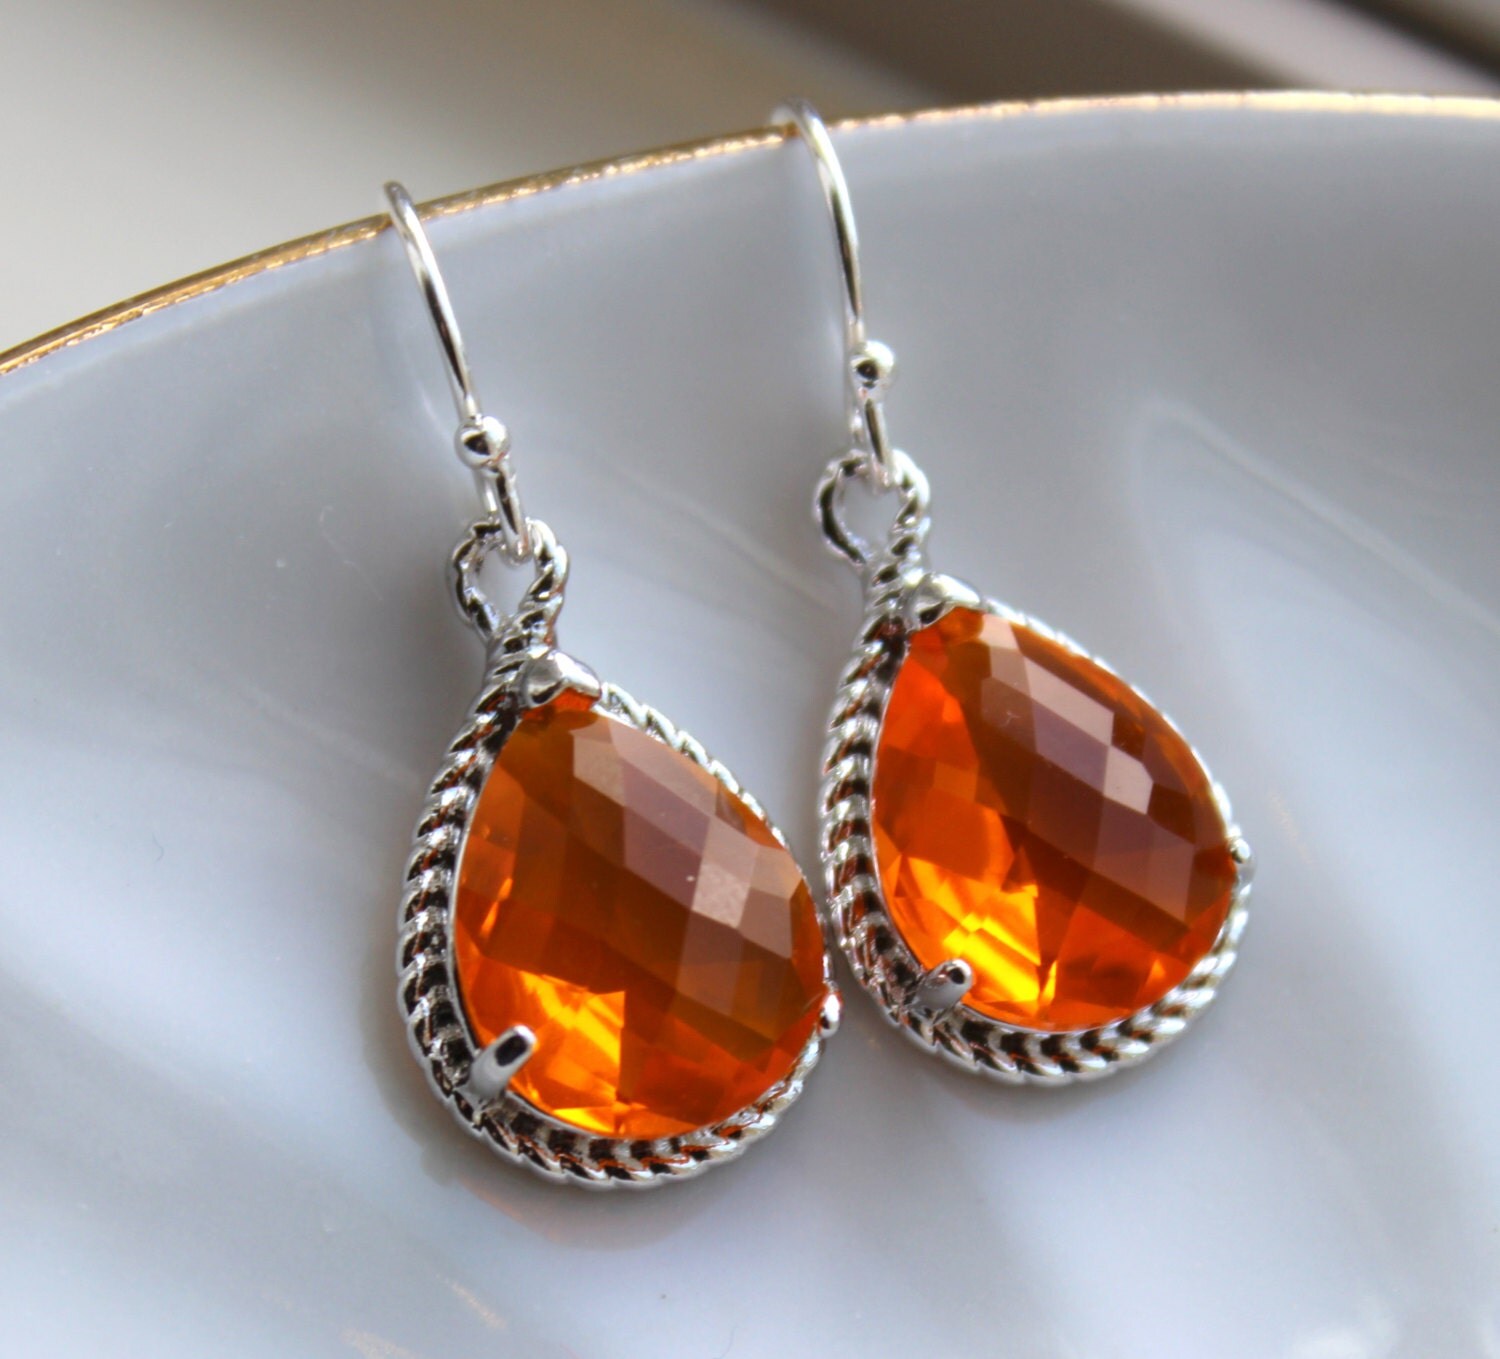 necklace and earring set orange gems